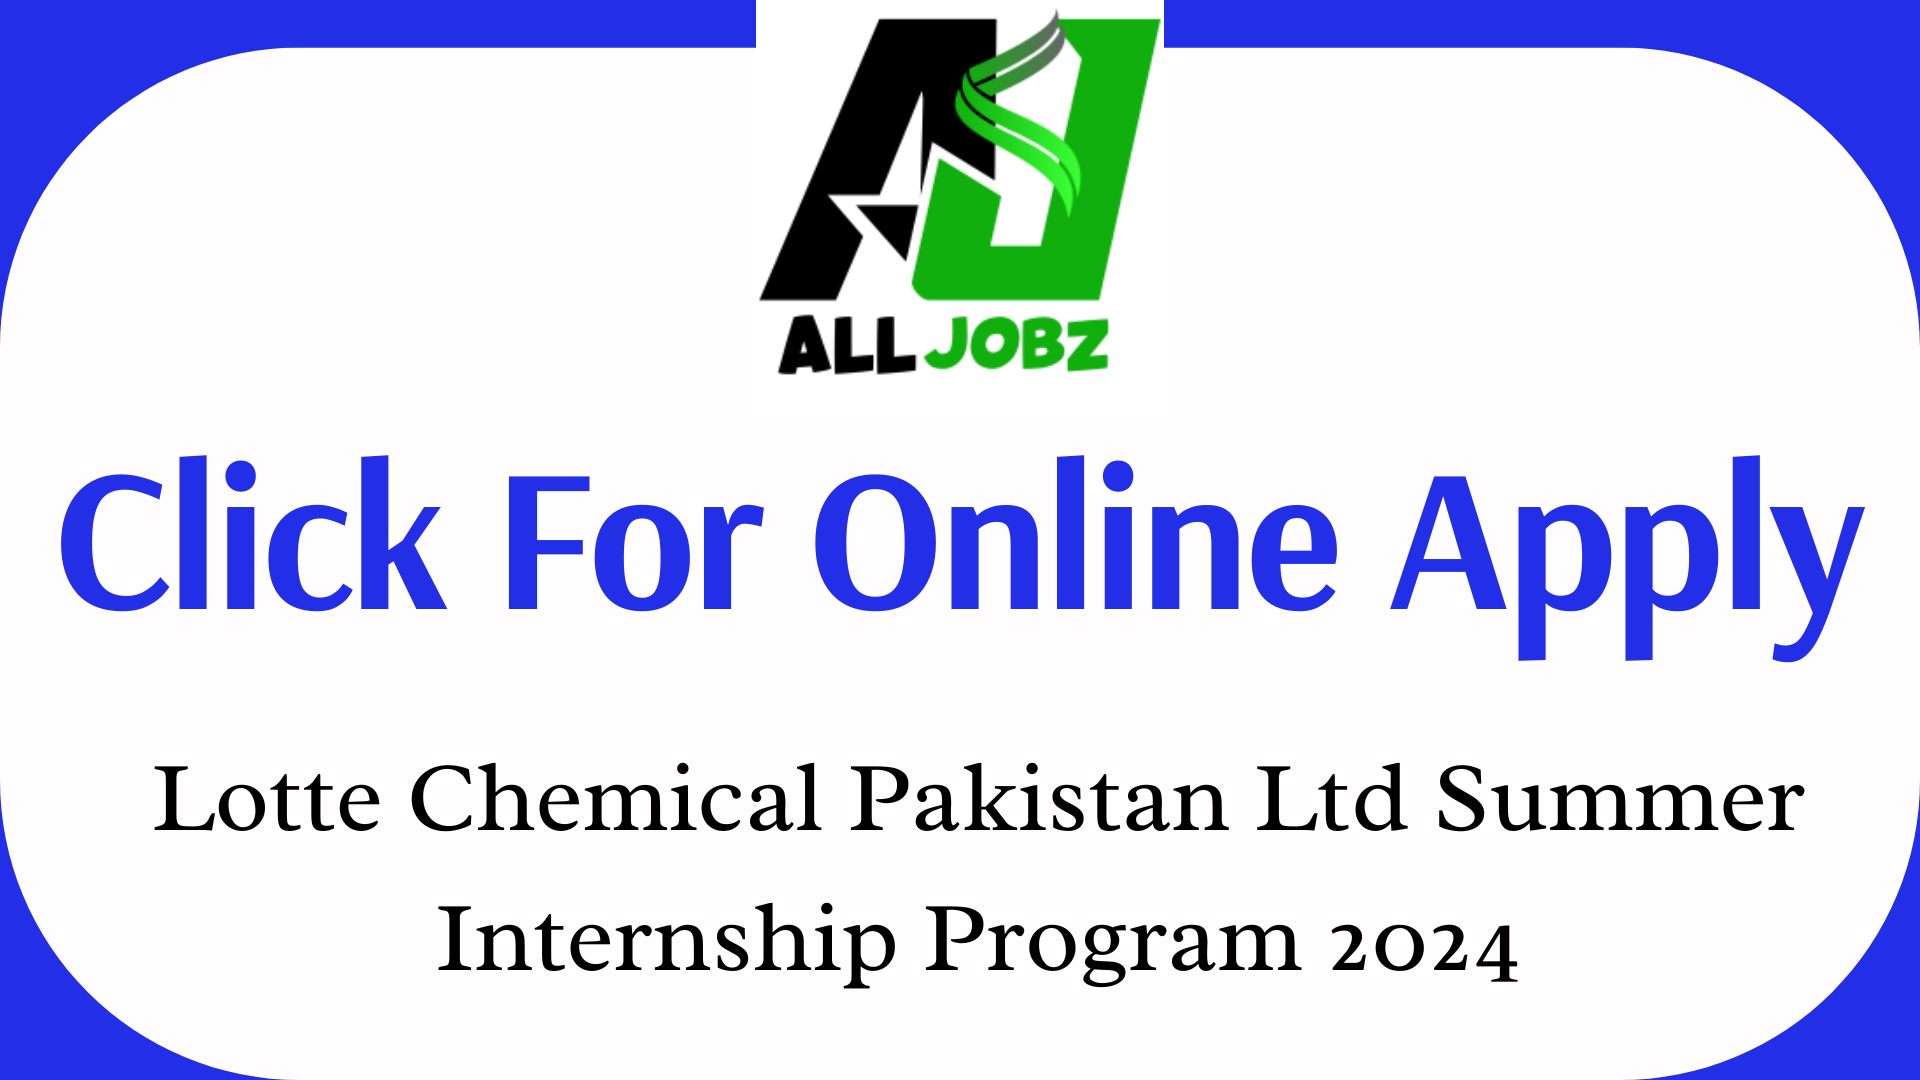 Lotte Chemical Pakistan Ltd Summer Internship Program 2024